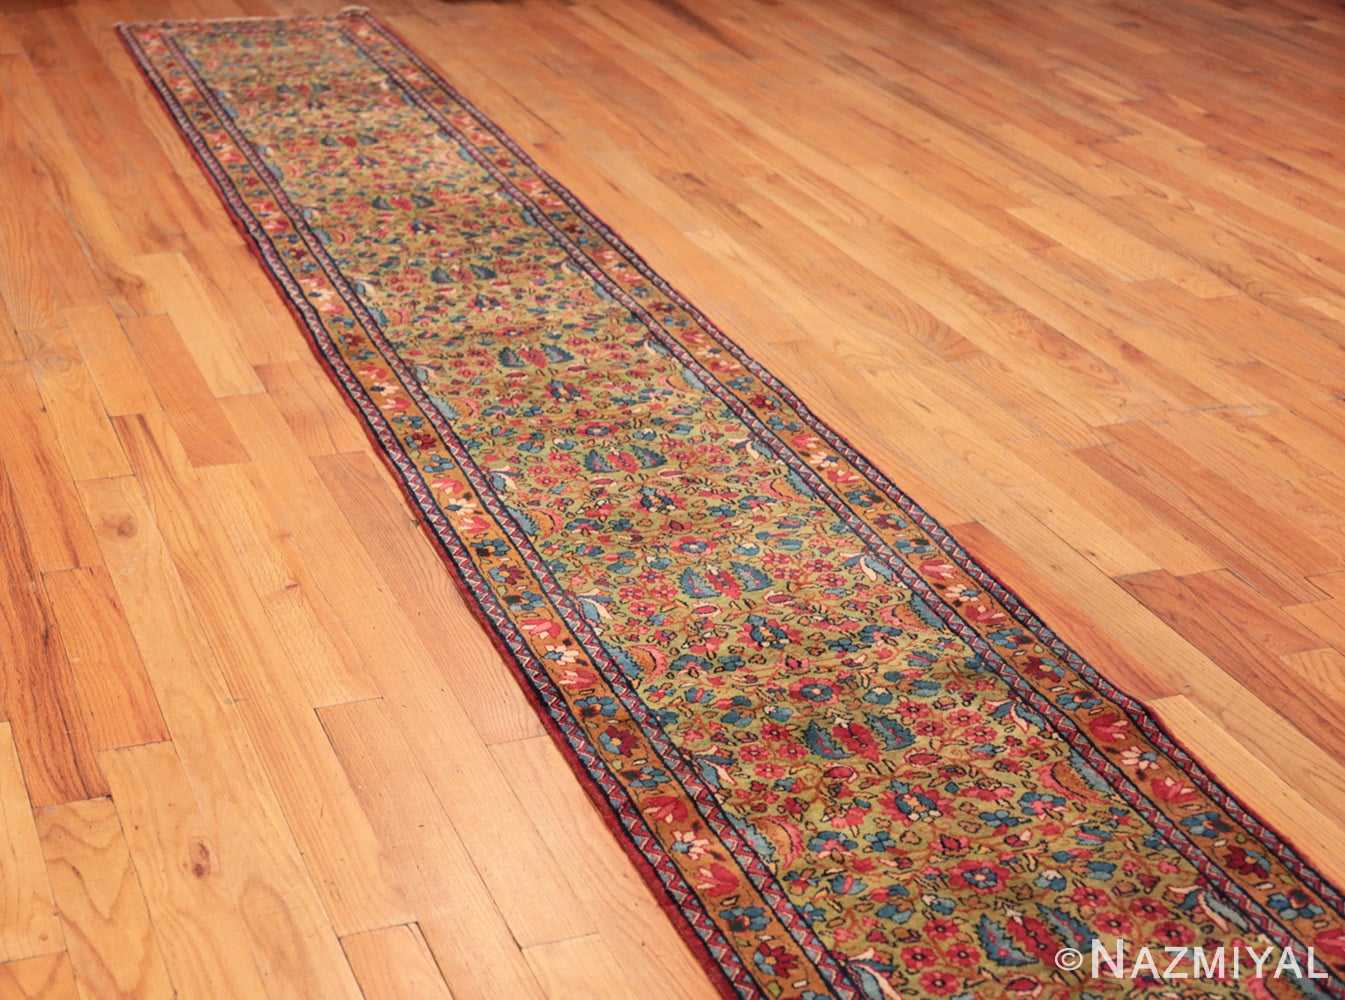 Full Antique Kerman Persian rug 70165 by Nazmiyal